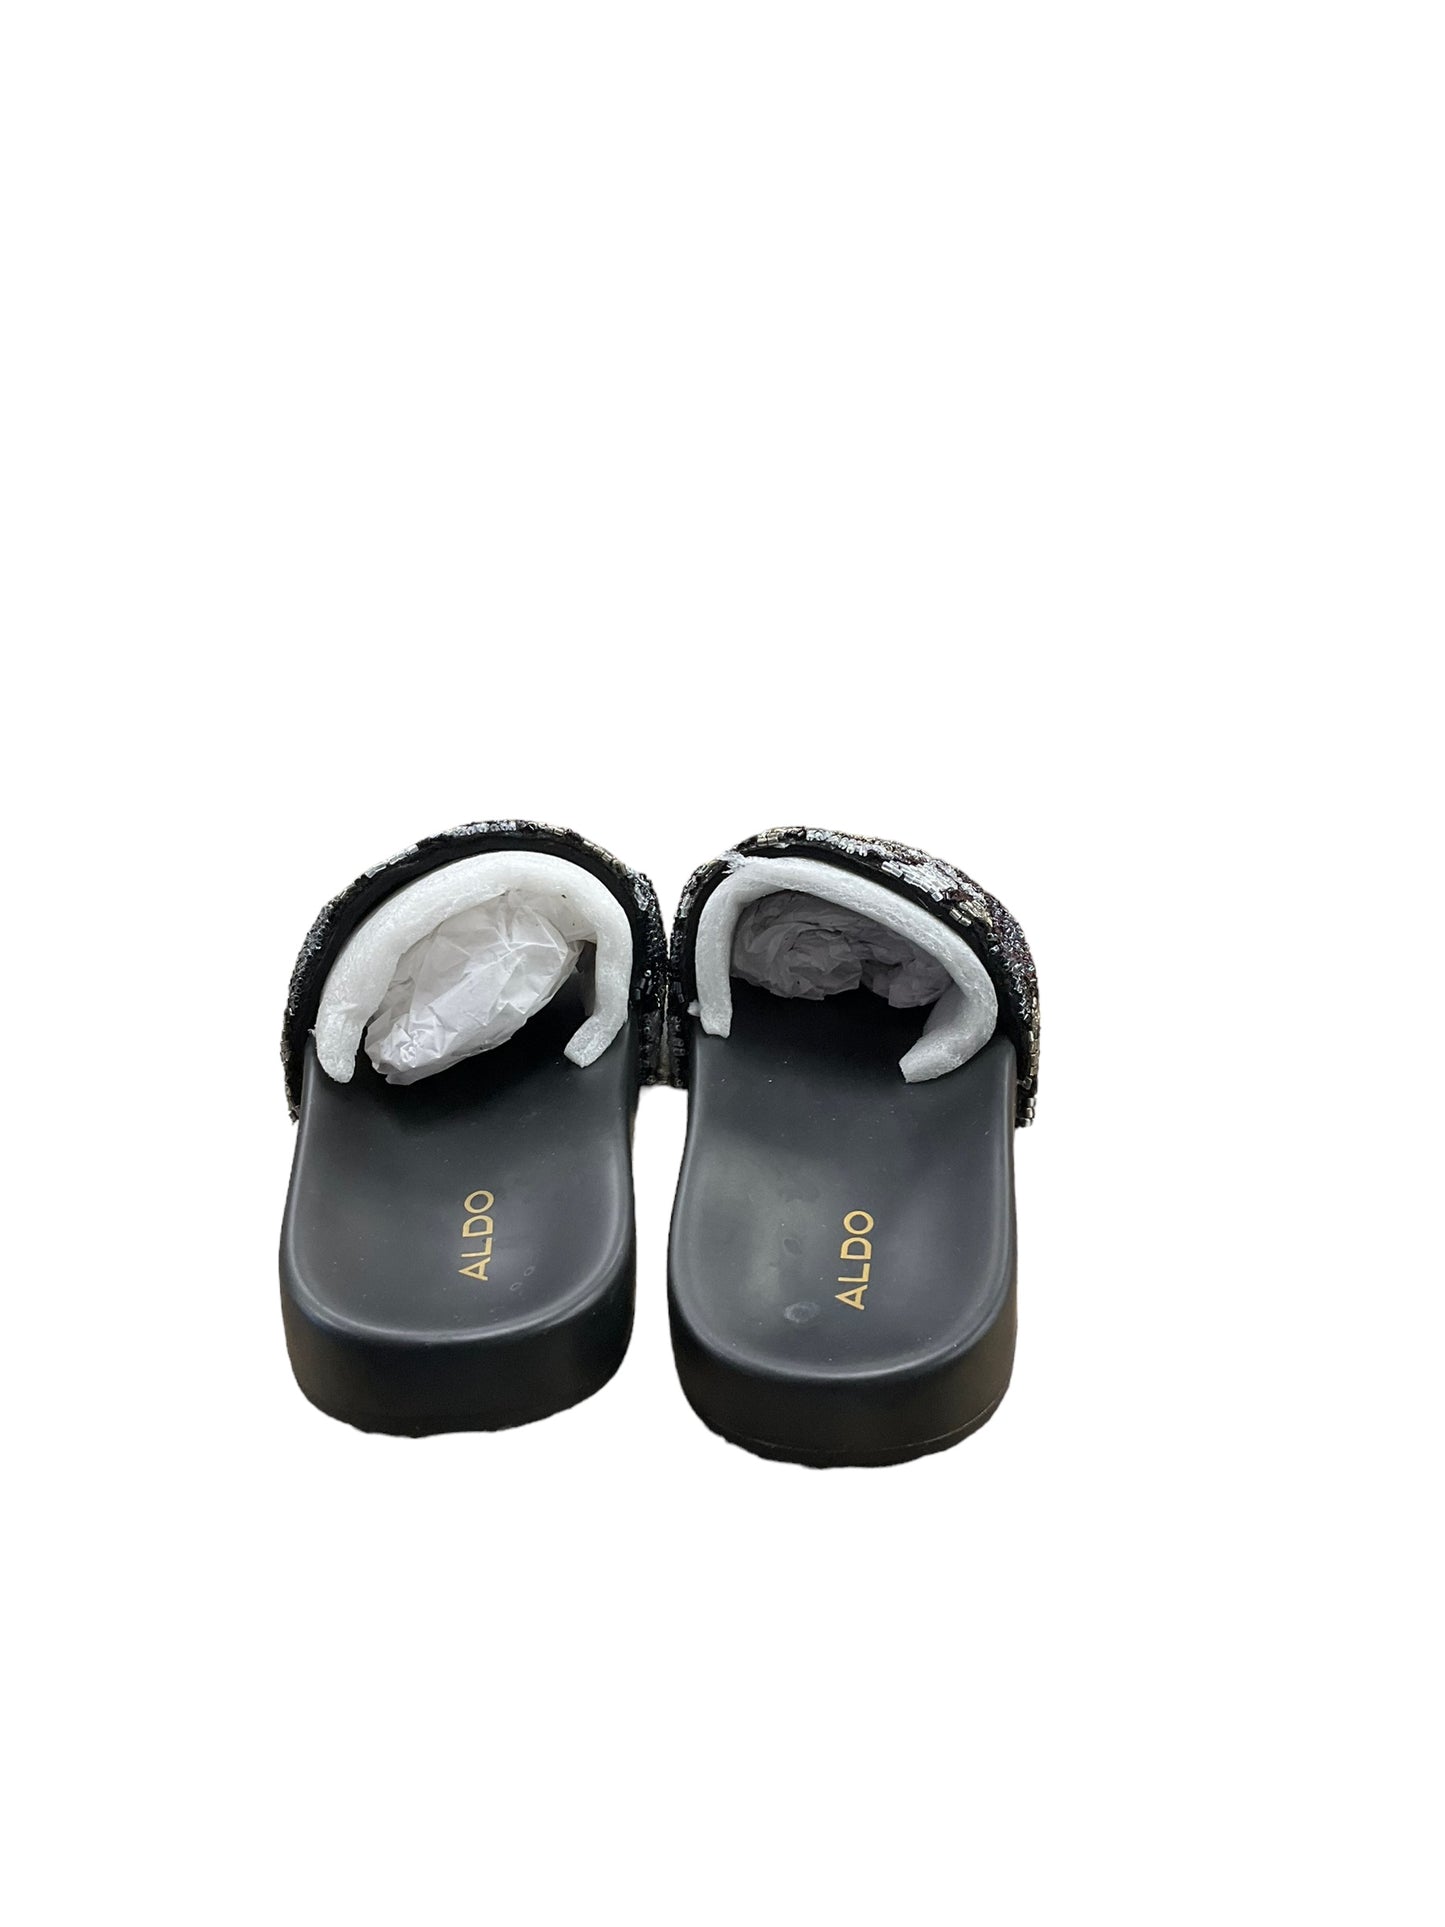 Sandals Flats By Aldo  Size: 7.5